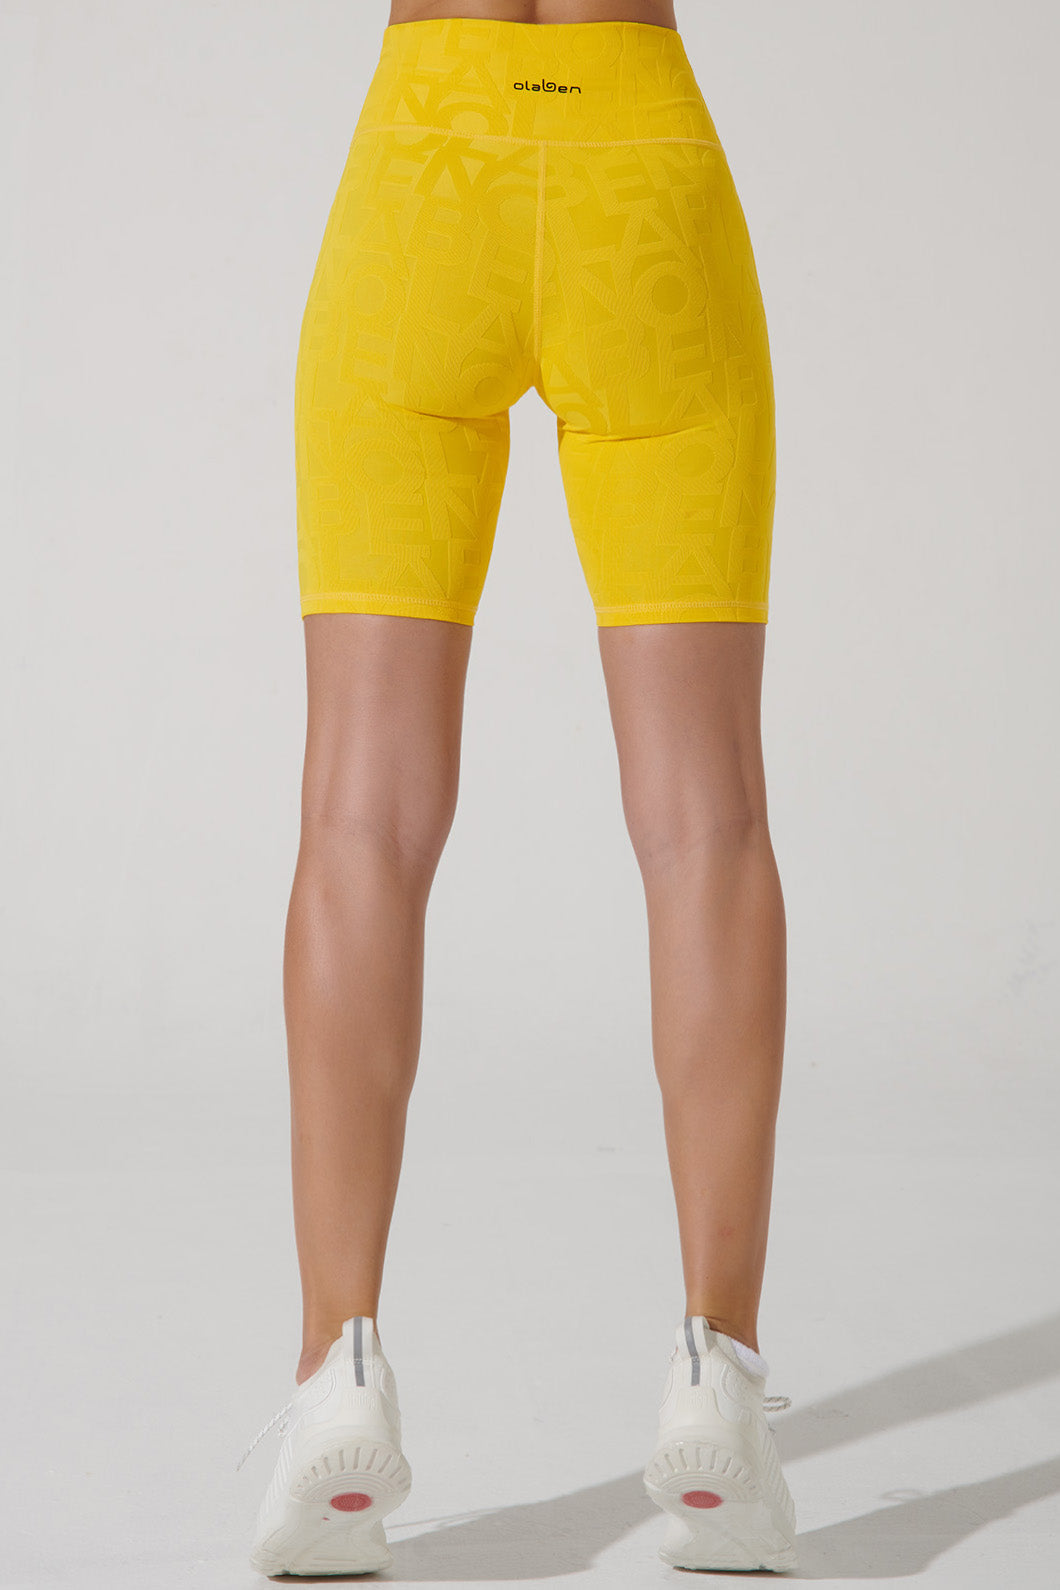 Vibrant gamboge yellow women's shorts with 3D design - fonte_bikershort_3d_womens_shorts_gamboge_yellow_OW-0060-WSH-YL_2.jpg